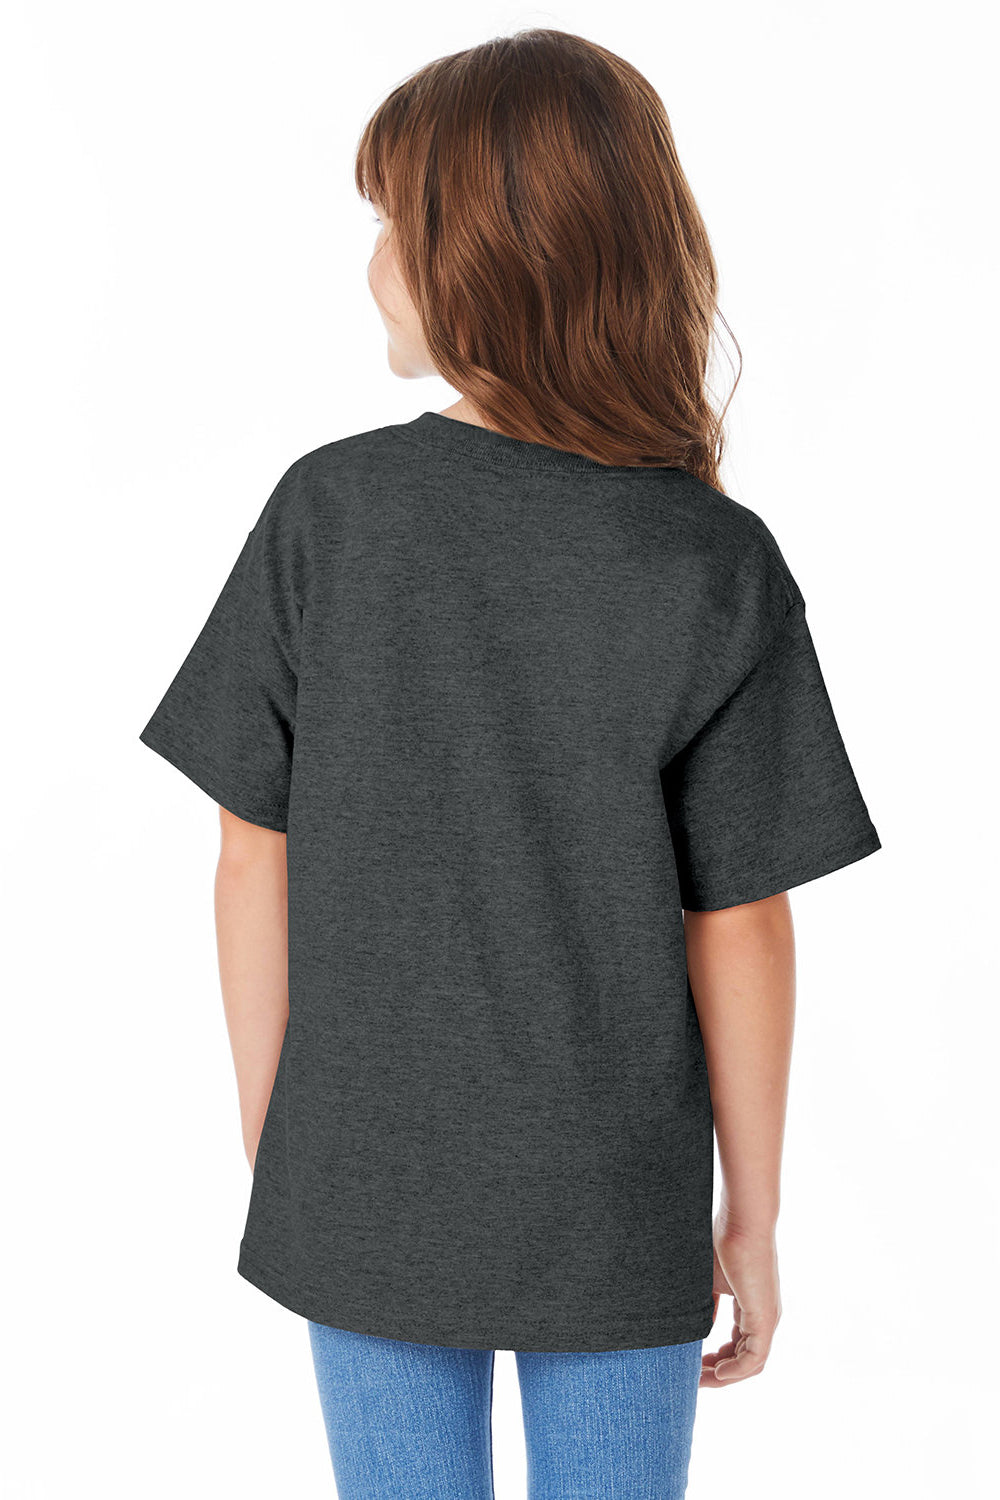 Hanes 5480 Youth ComfortSoft Short Sleeve Crewneck T-Shirt Heather Charcoal Grey Back